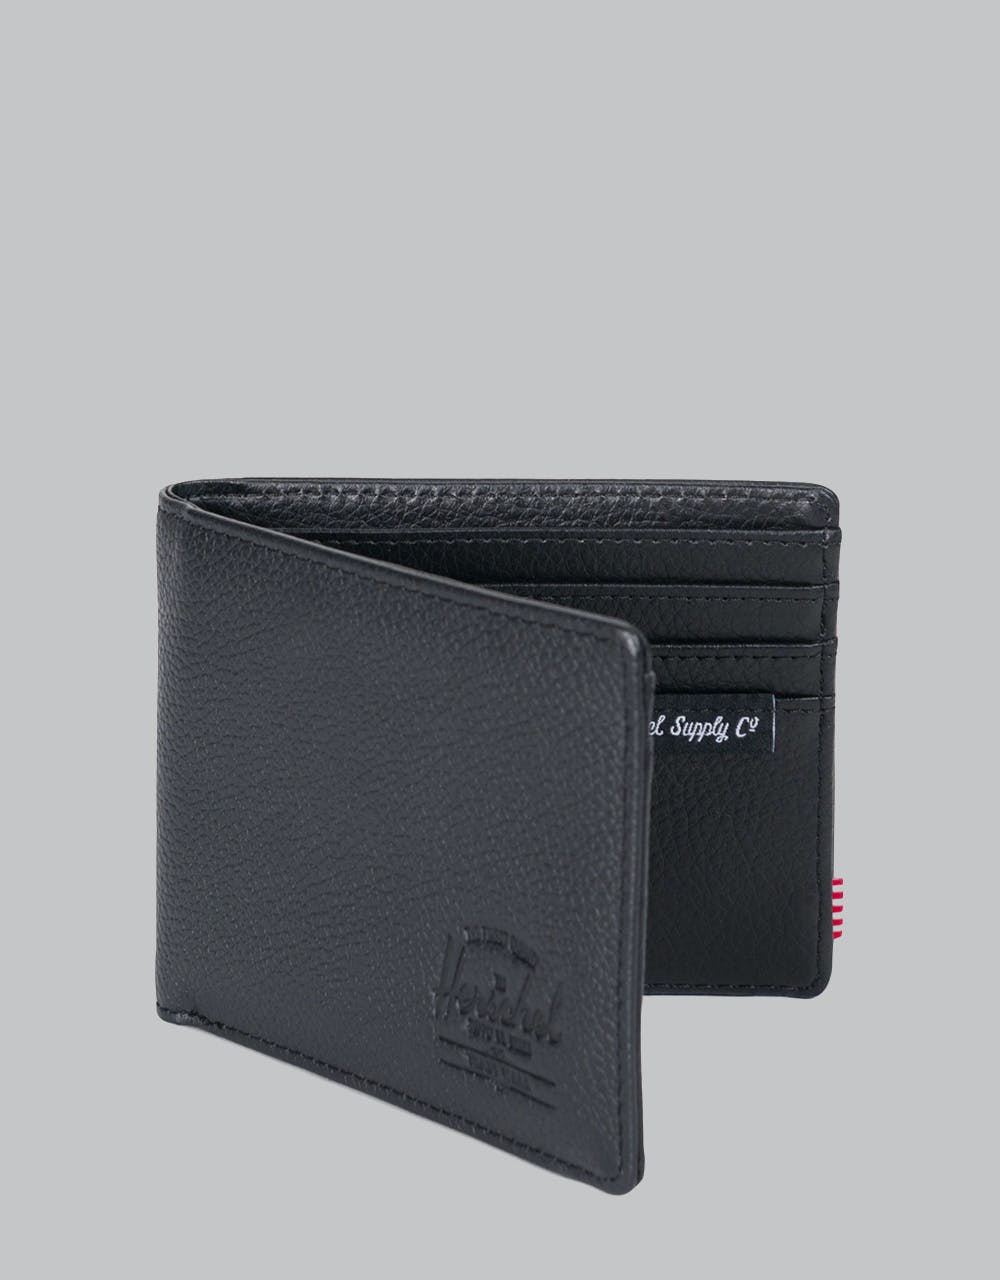 Herschel Supply Co. Hank Leather  RFID Wallet - Black Pebbled Leather